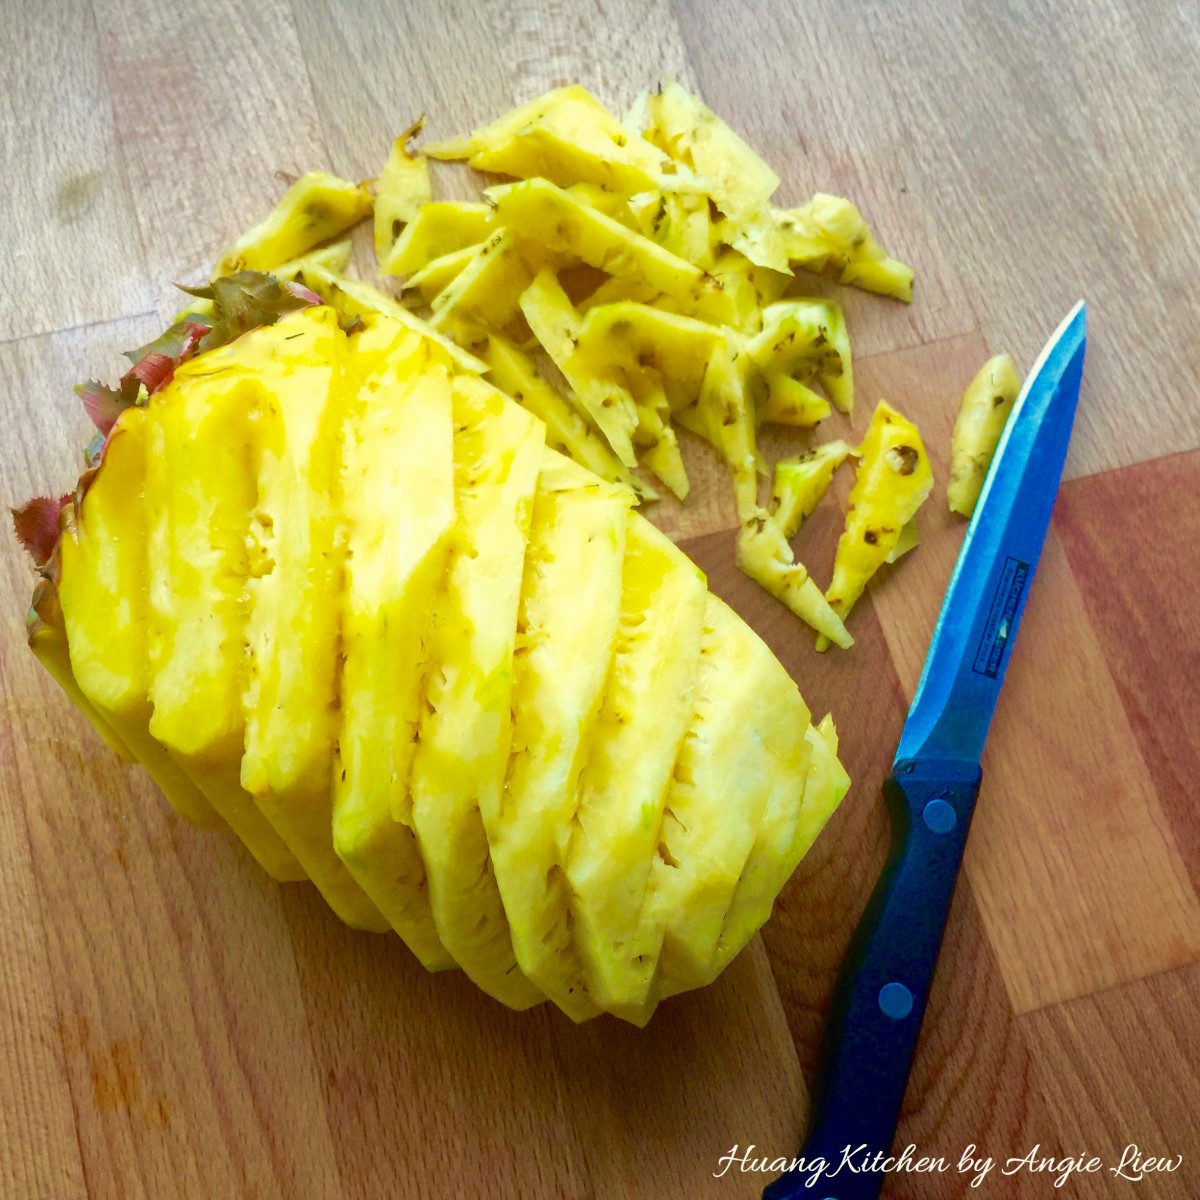 Pineapple Jam Recipe - remove pineapple "eyes"